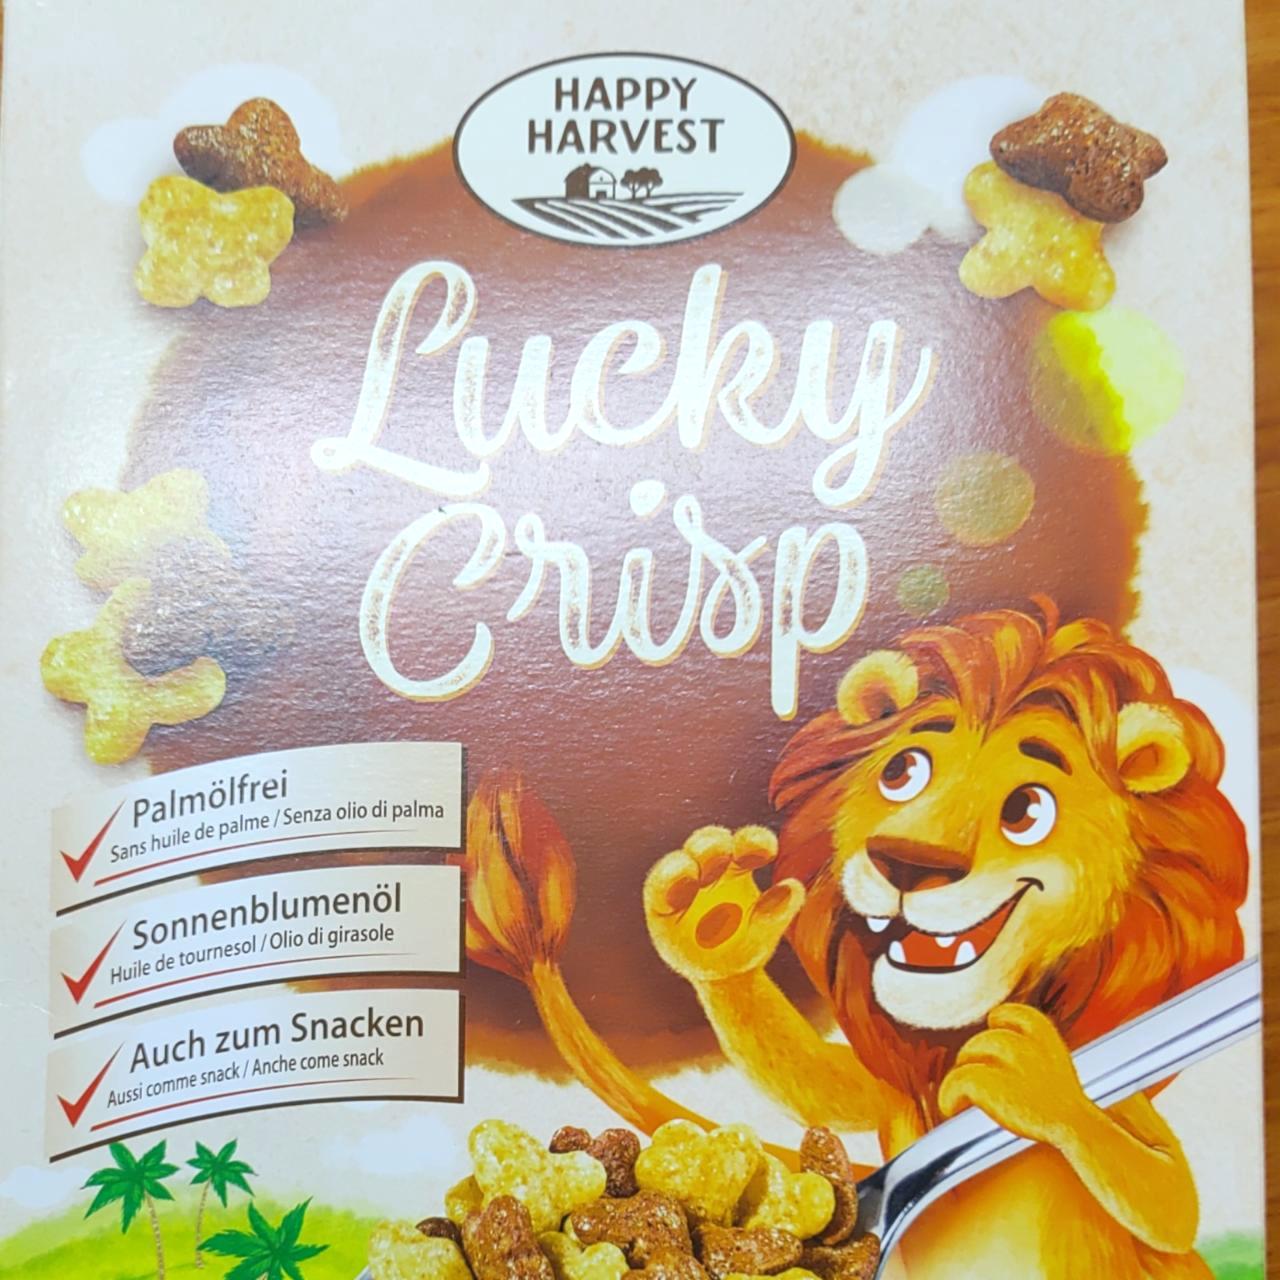 Képek - Lucky crips Happy Harvest